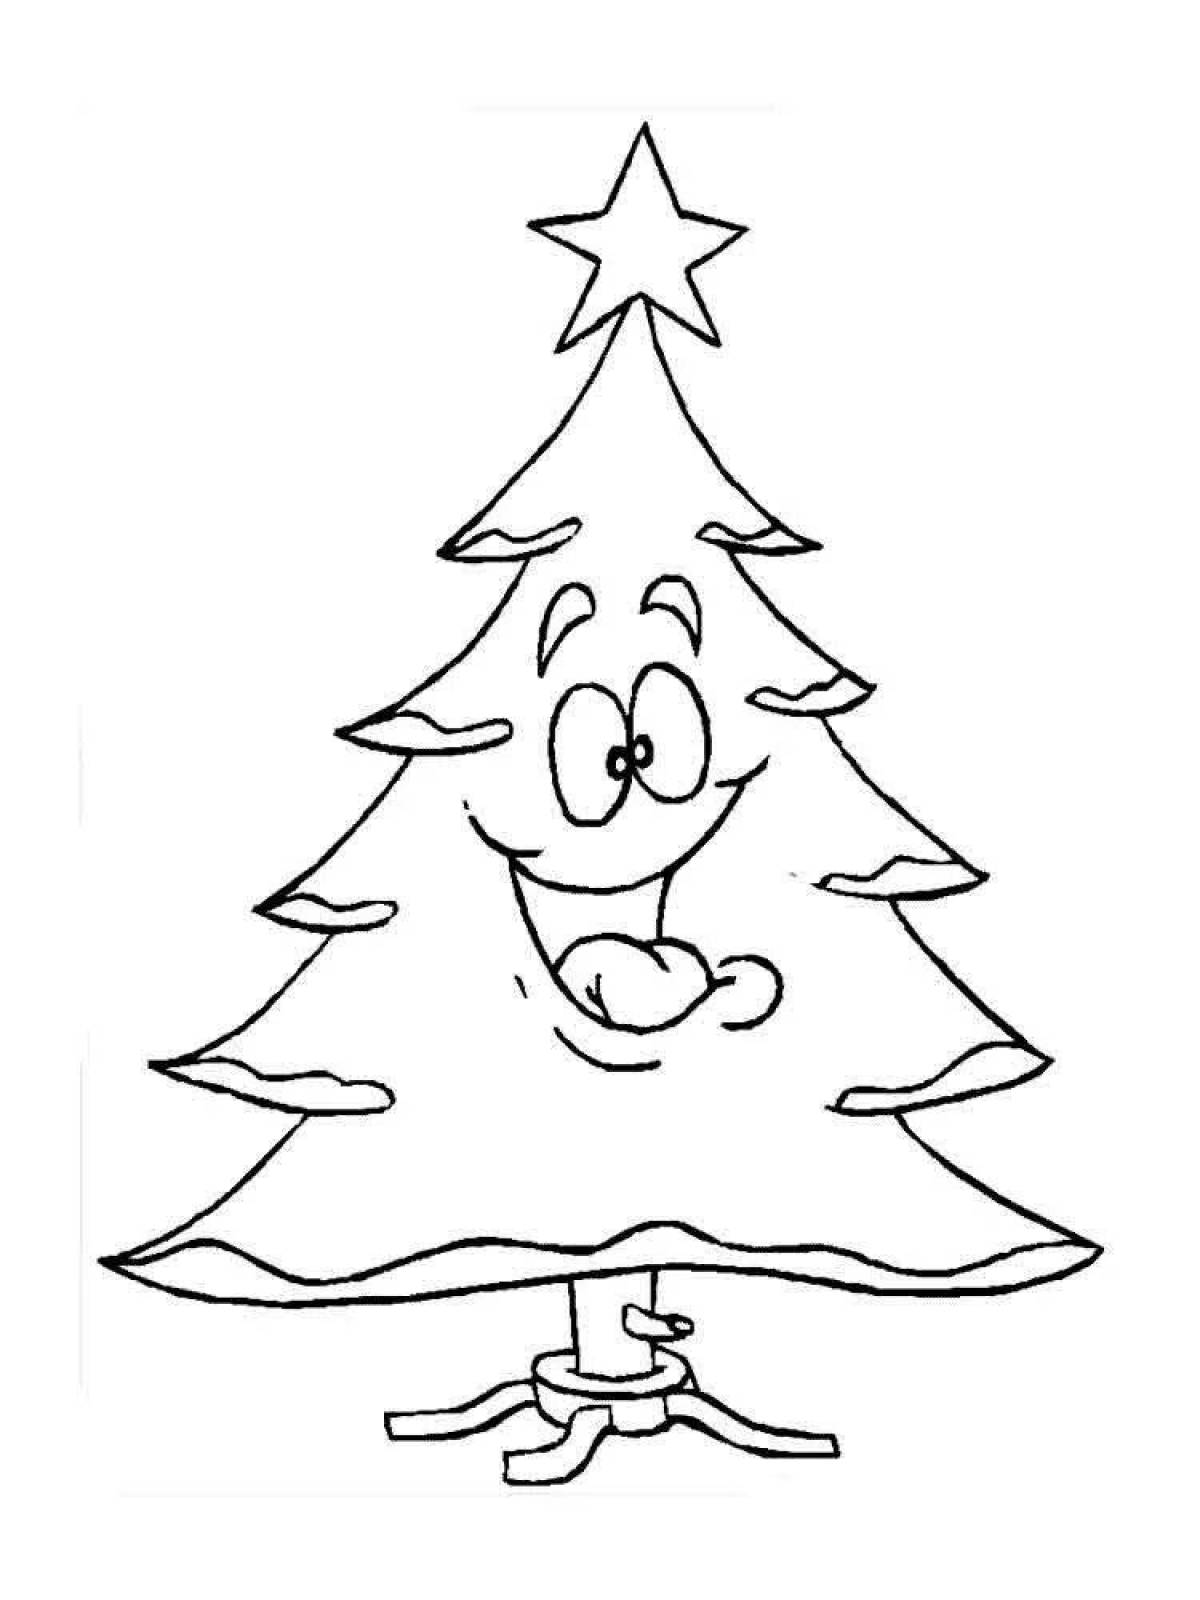 Wonderful Christmas tree coloring template